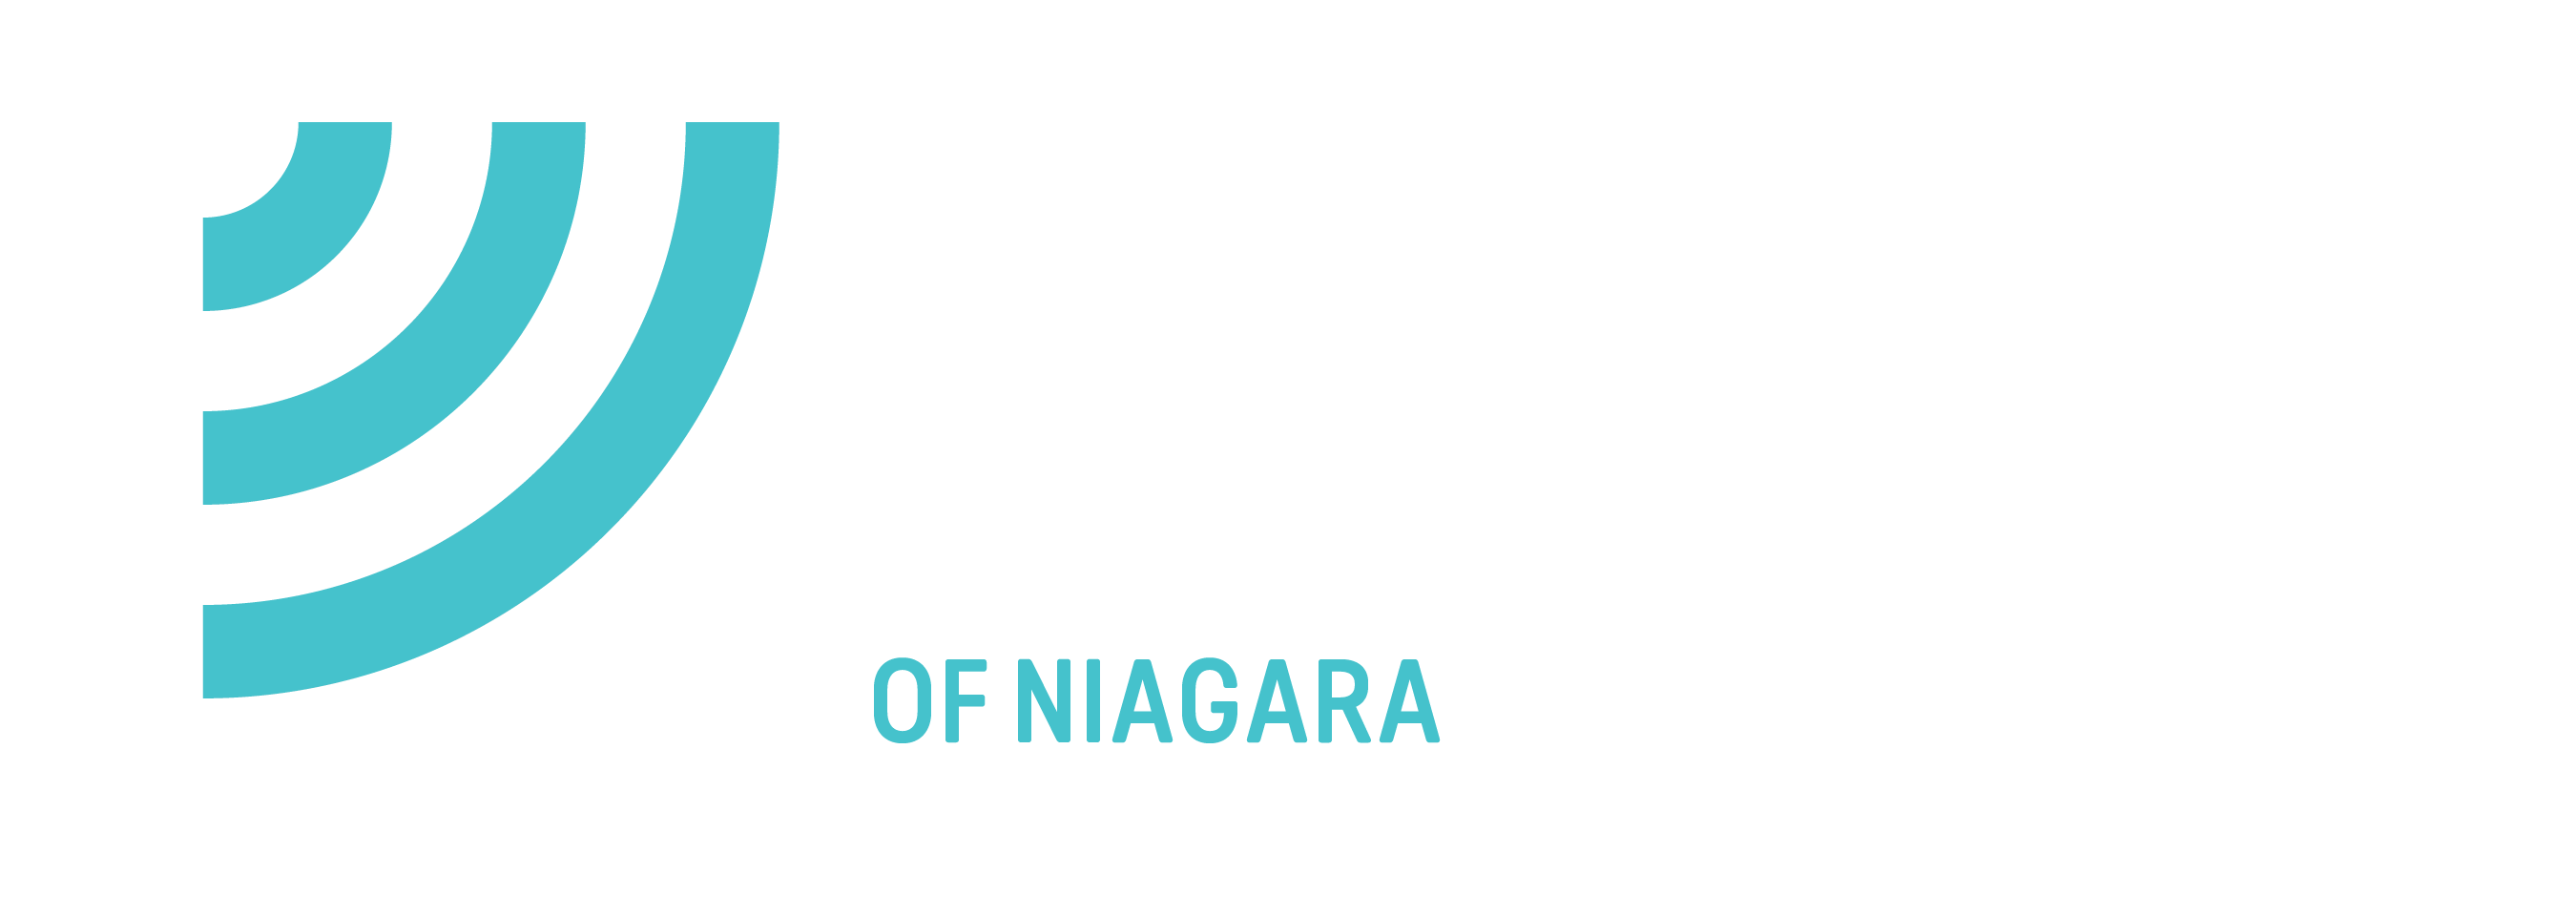 Annual Report - Big Brothers Big Sisters of Niagara